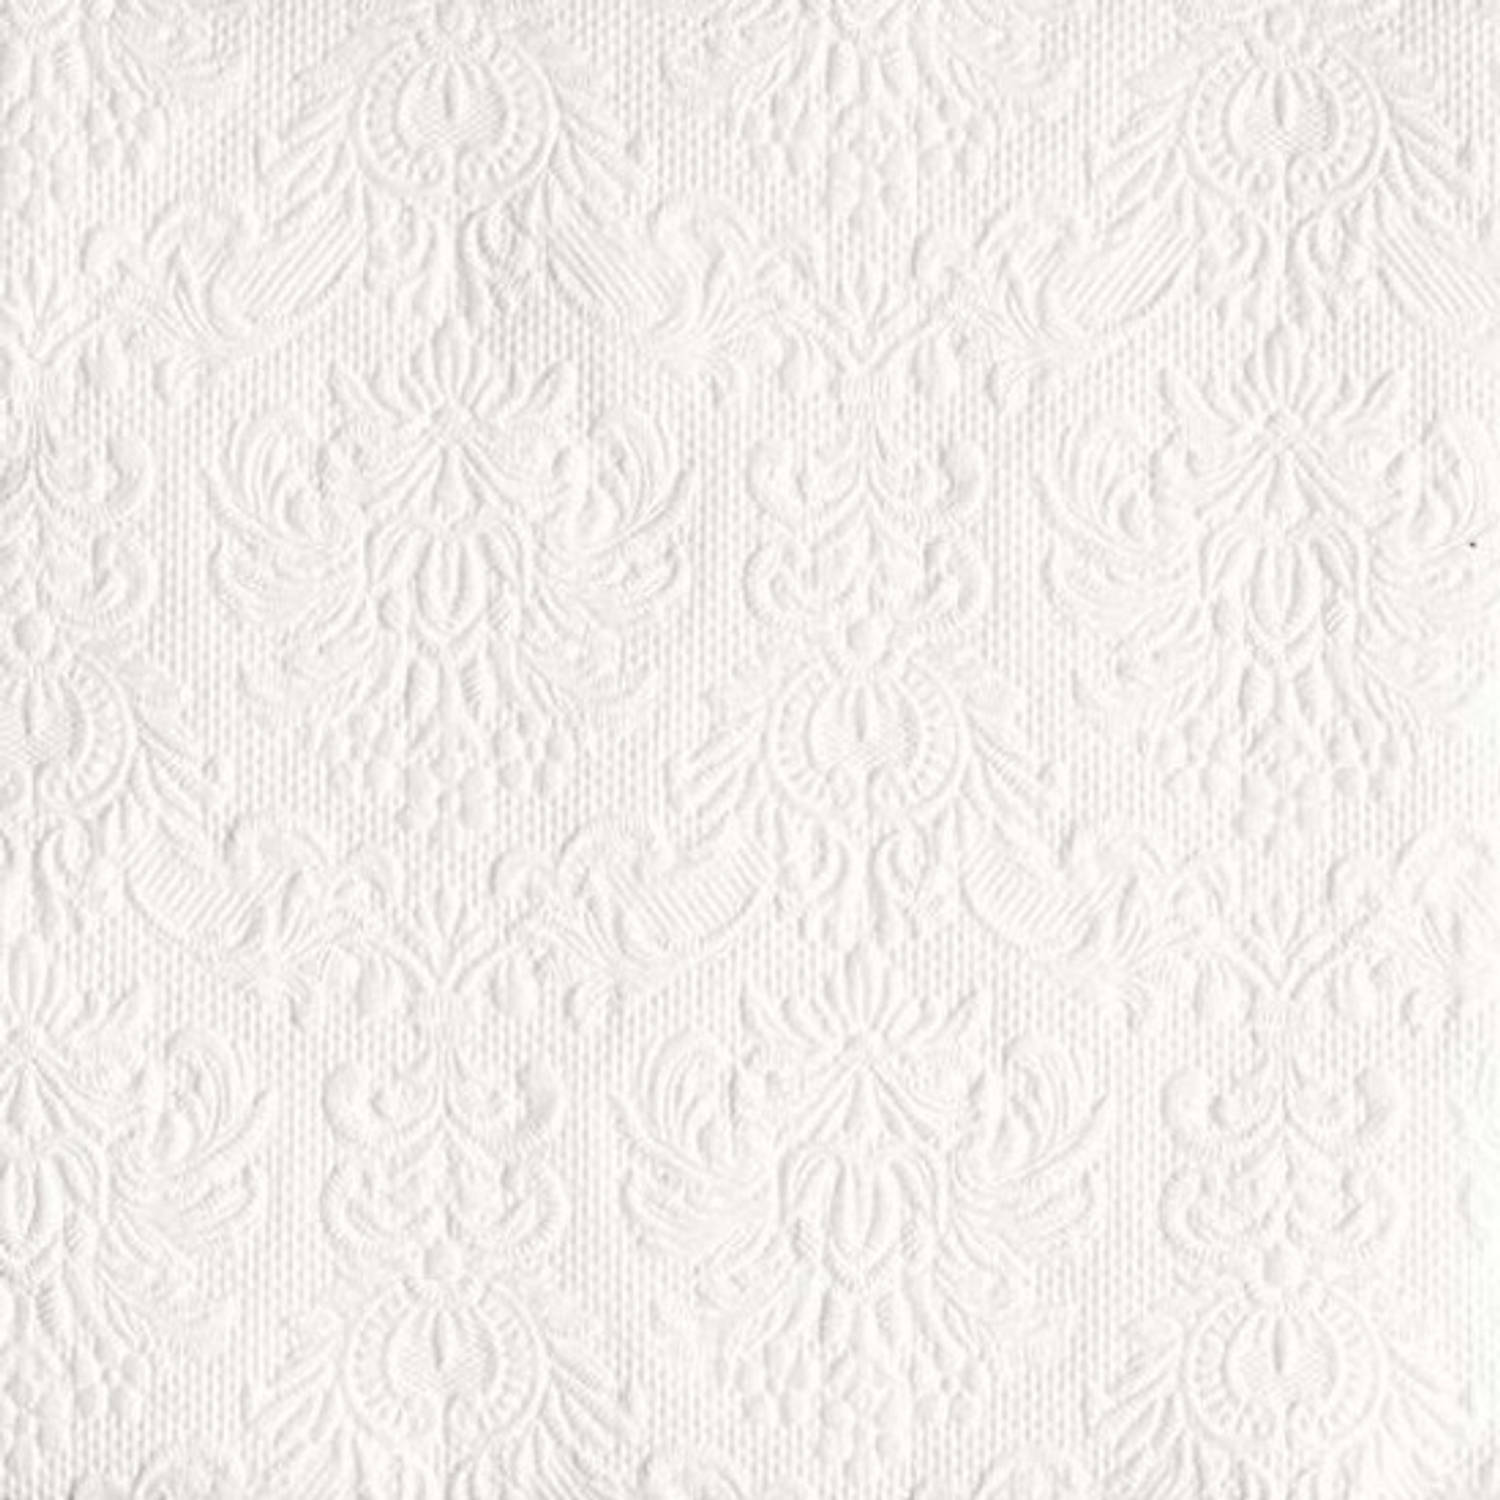 Ambiente 45x stuks Servetten wit barok stijl 3-laags - elegance - barok patroon - Feest artikelen - feest decoraties